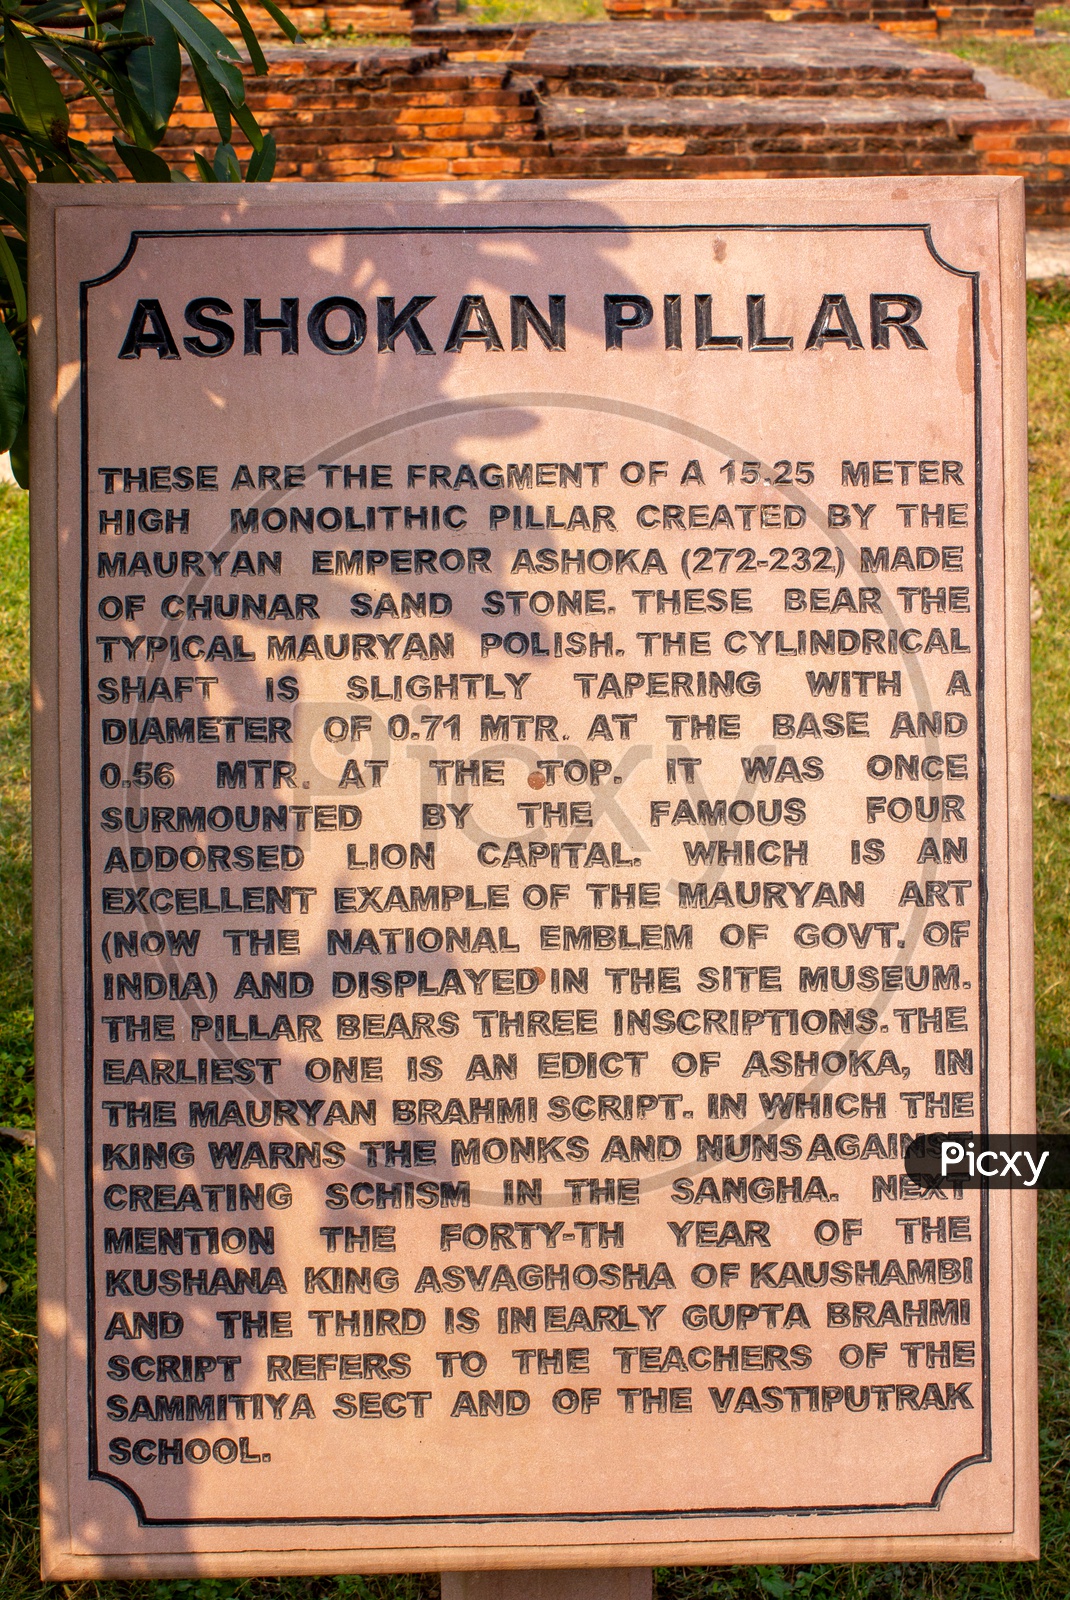 Note about the Ashokan Pillar